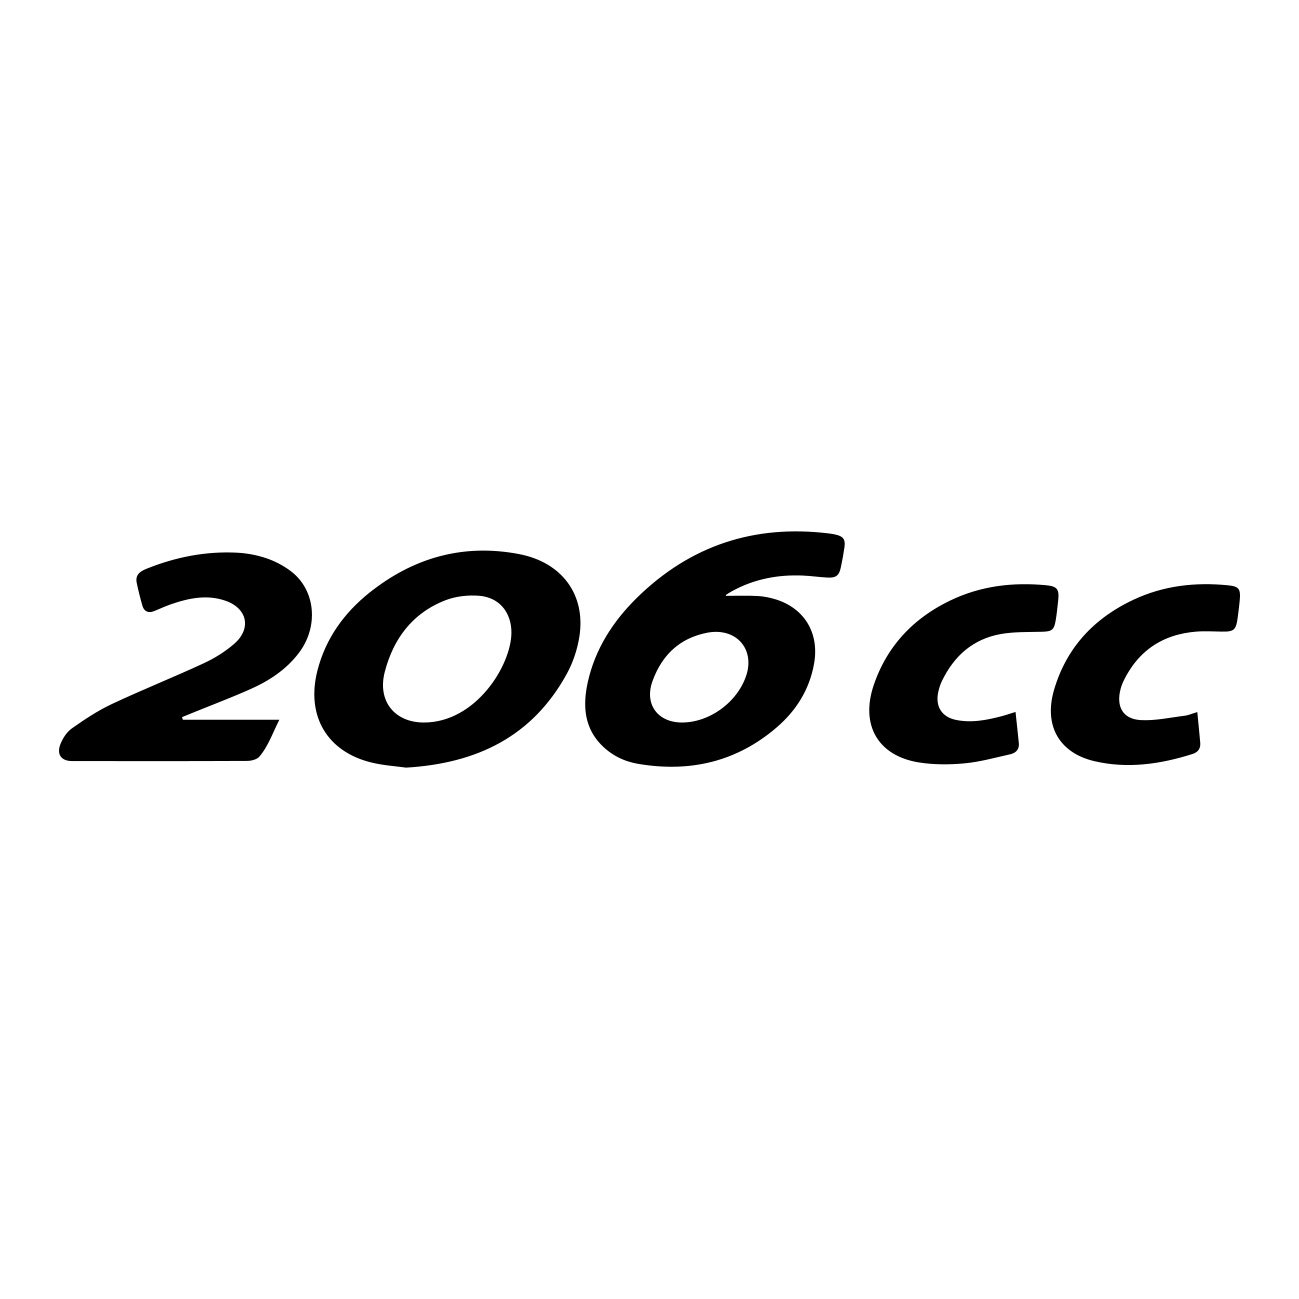 peugeot 206cc logo